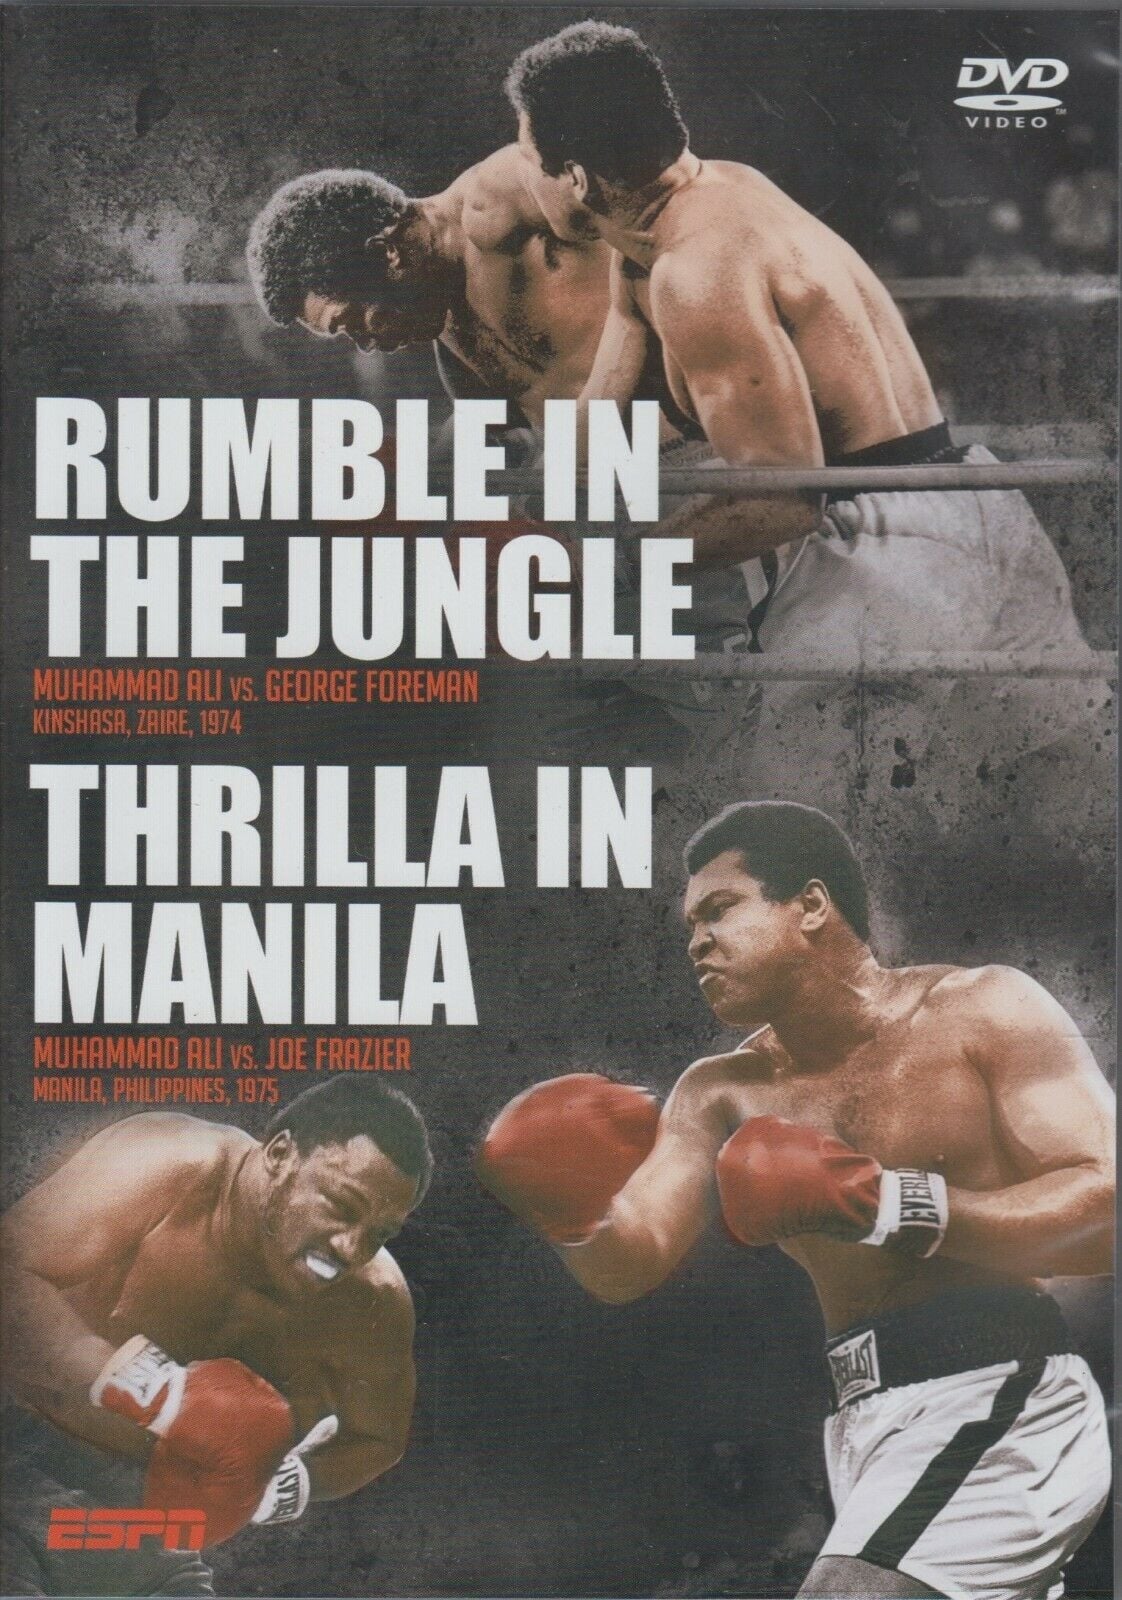 Thrilla in Manilla